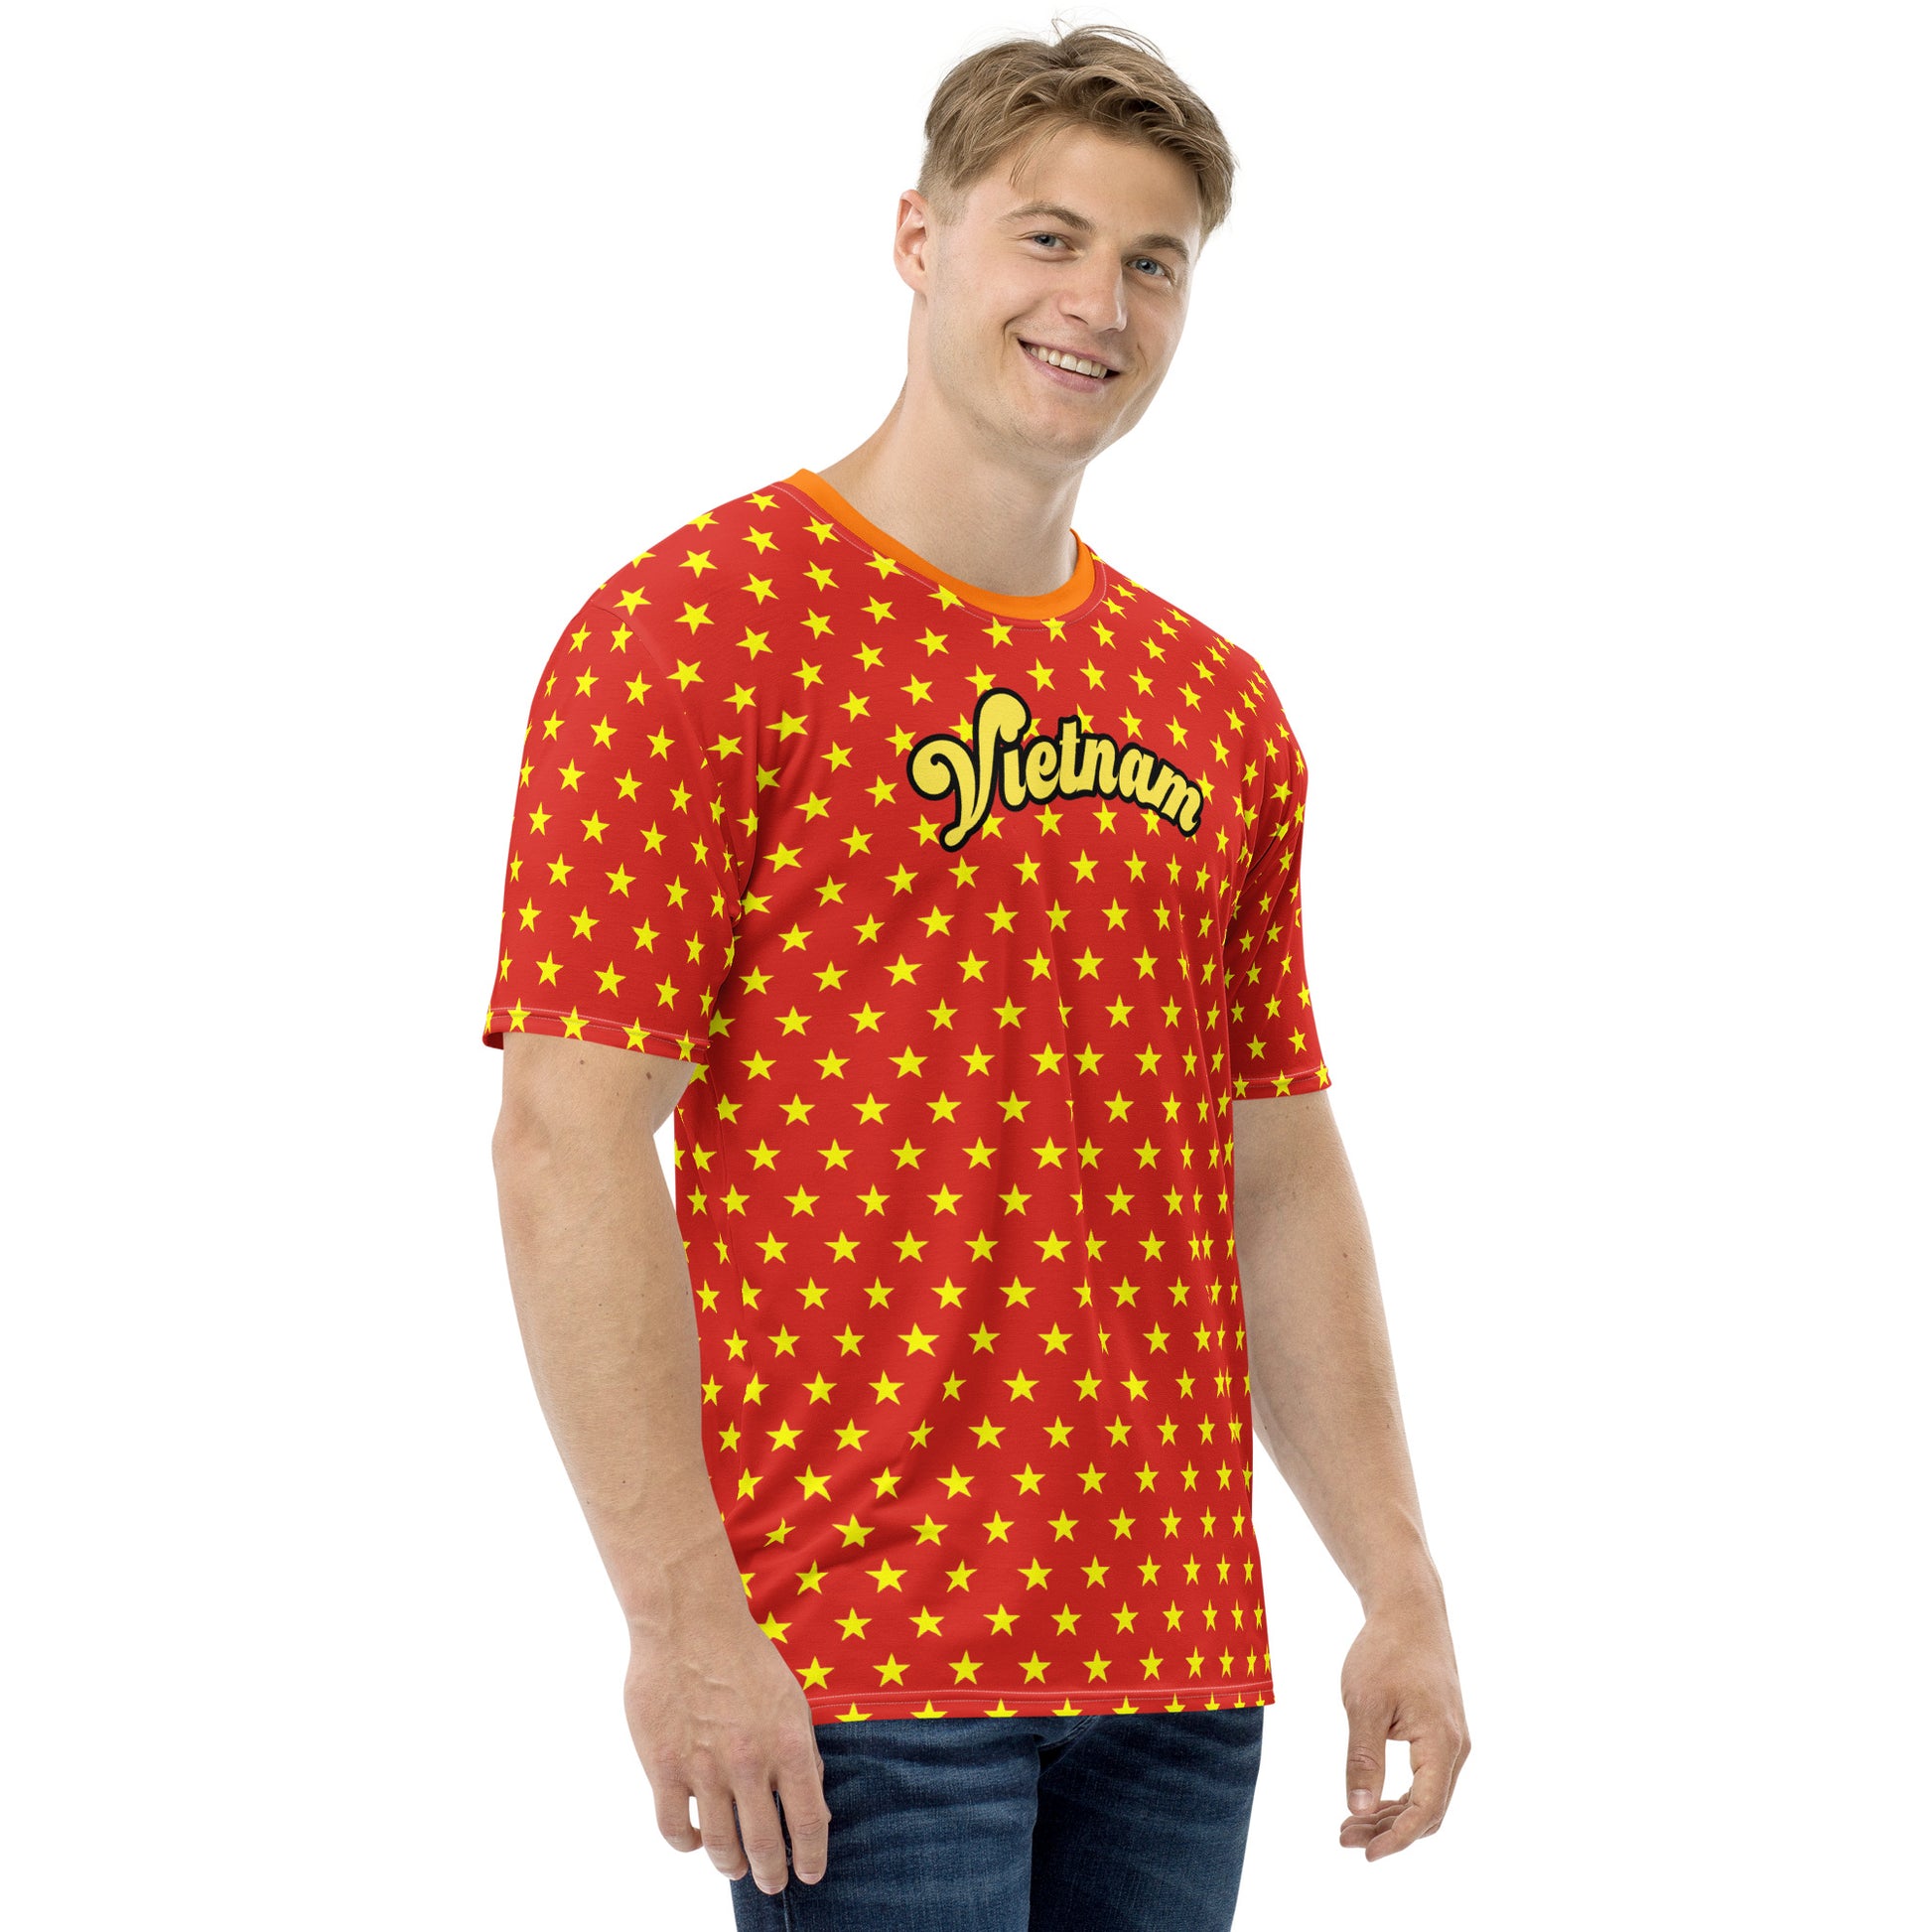 Men's Vietnam T-Shirt: A Fun Twist with Yellow Polka Dots